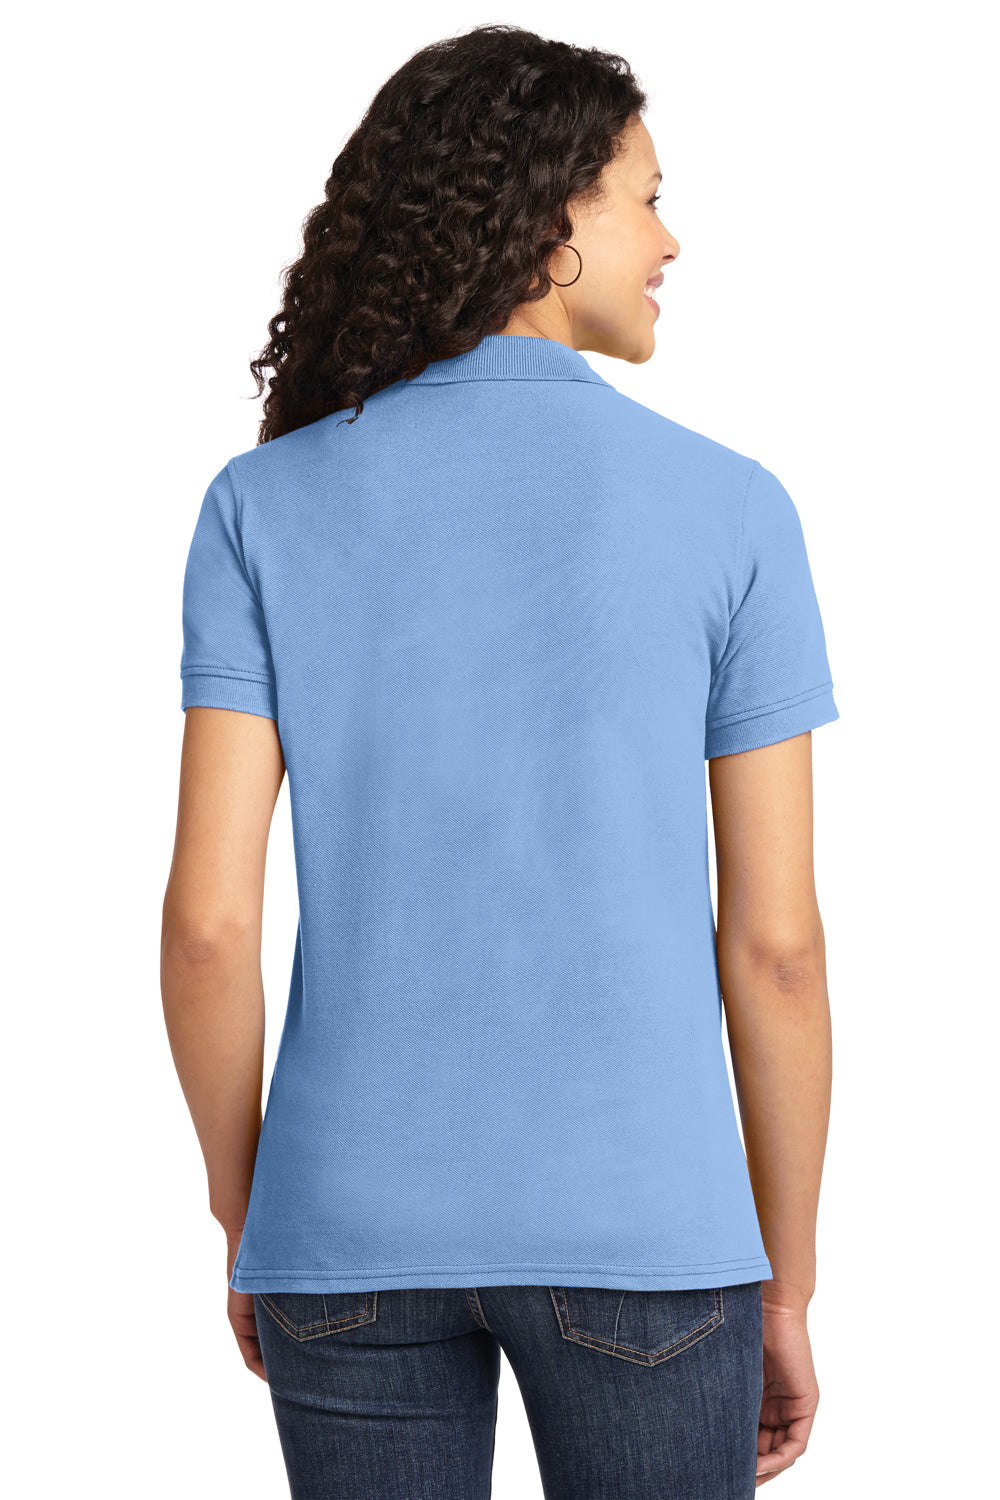 Port & Company LKP155 Womens Core Stain Resistant Short Sleeve Polo Shirt Light Blue Back